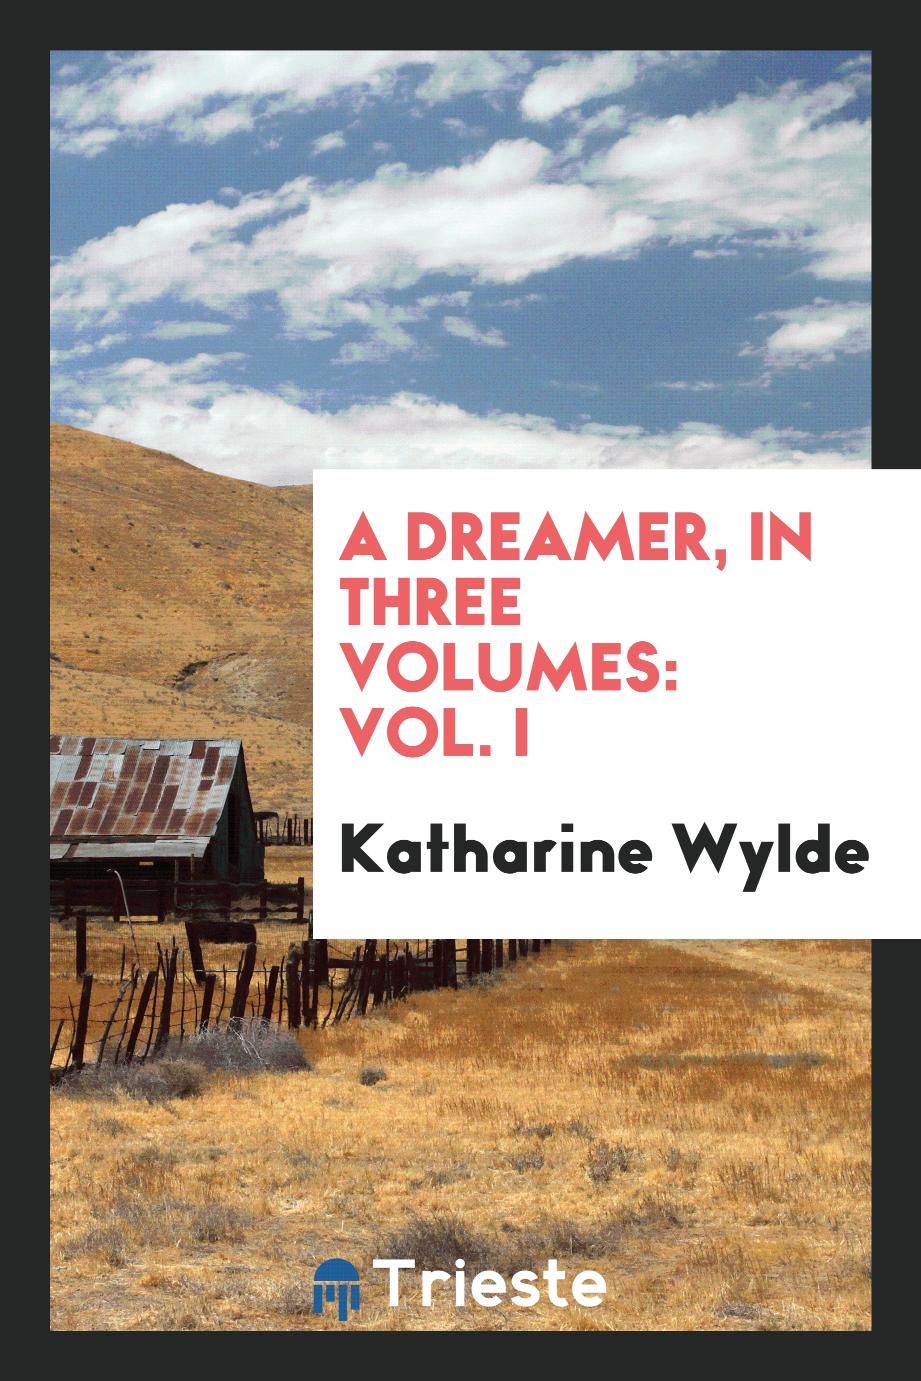 A dreamer, in three volumes: Vol. I